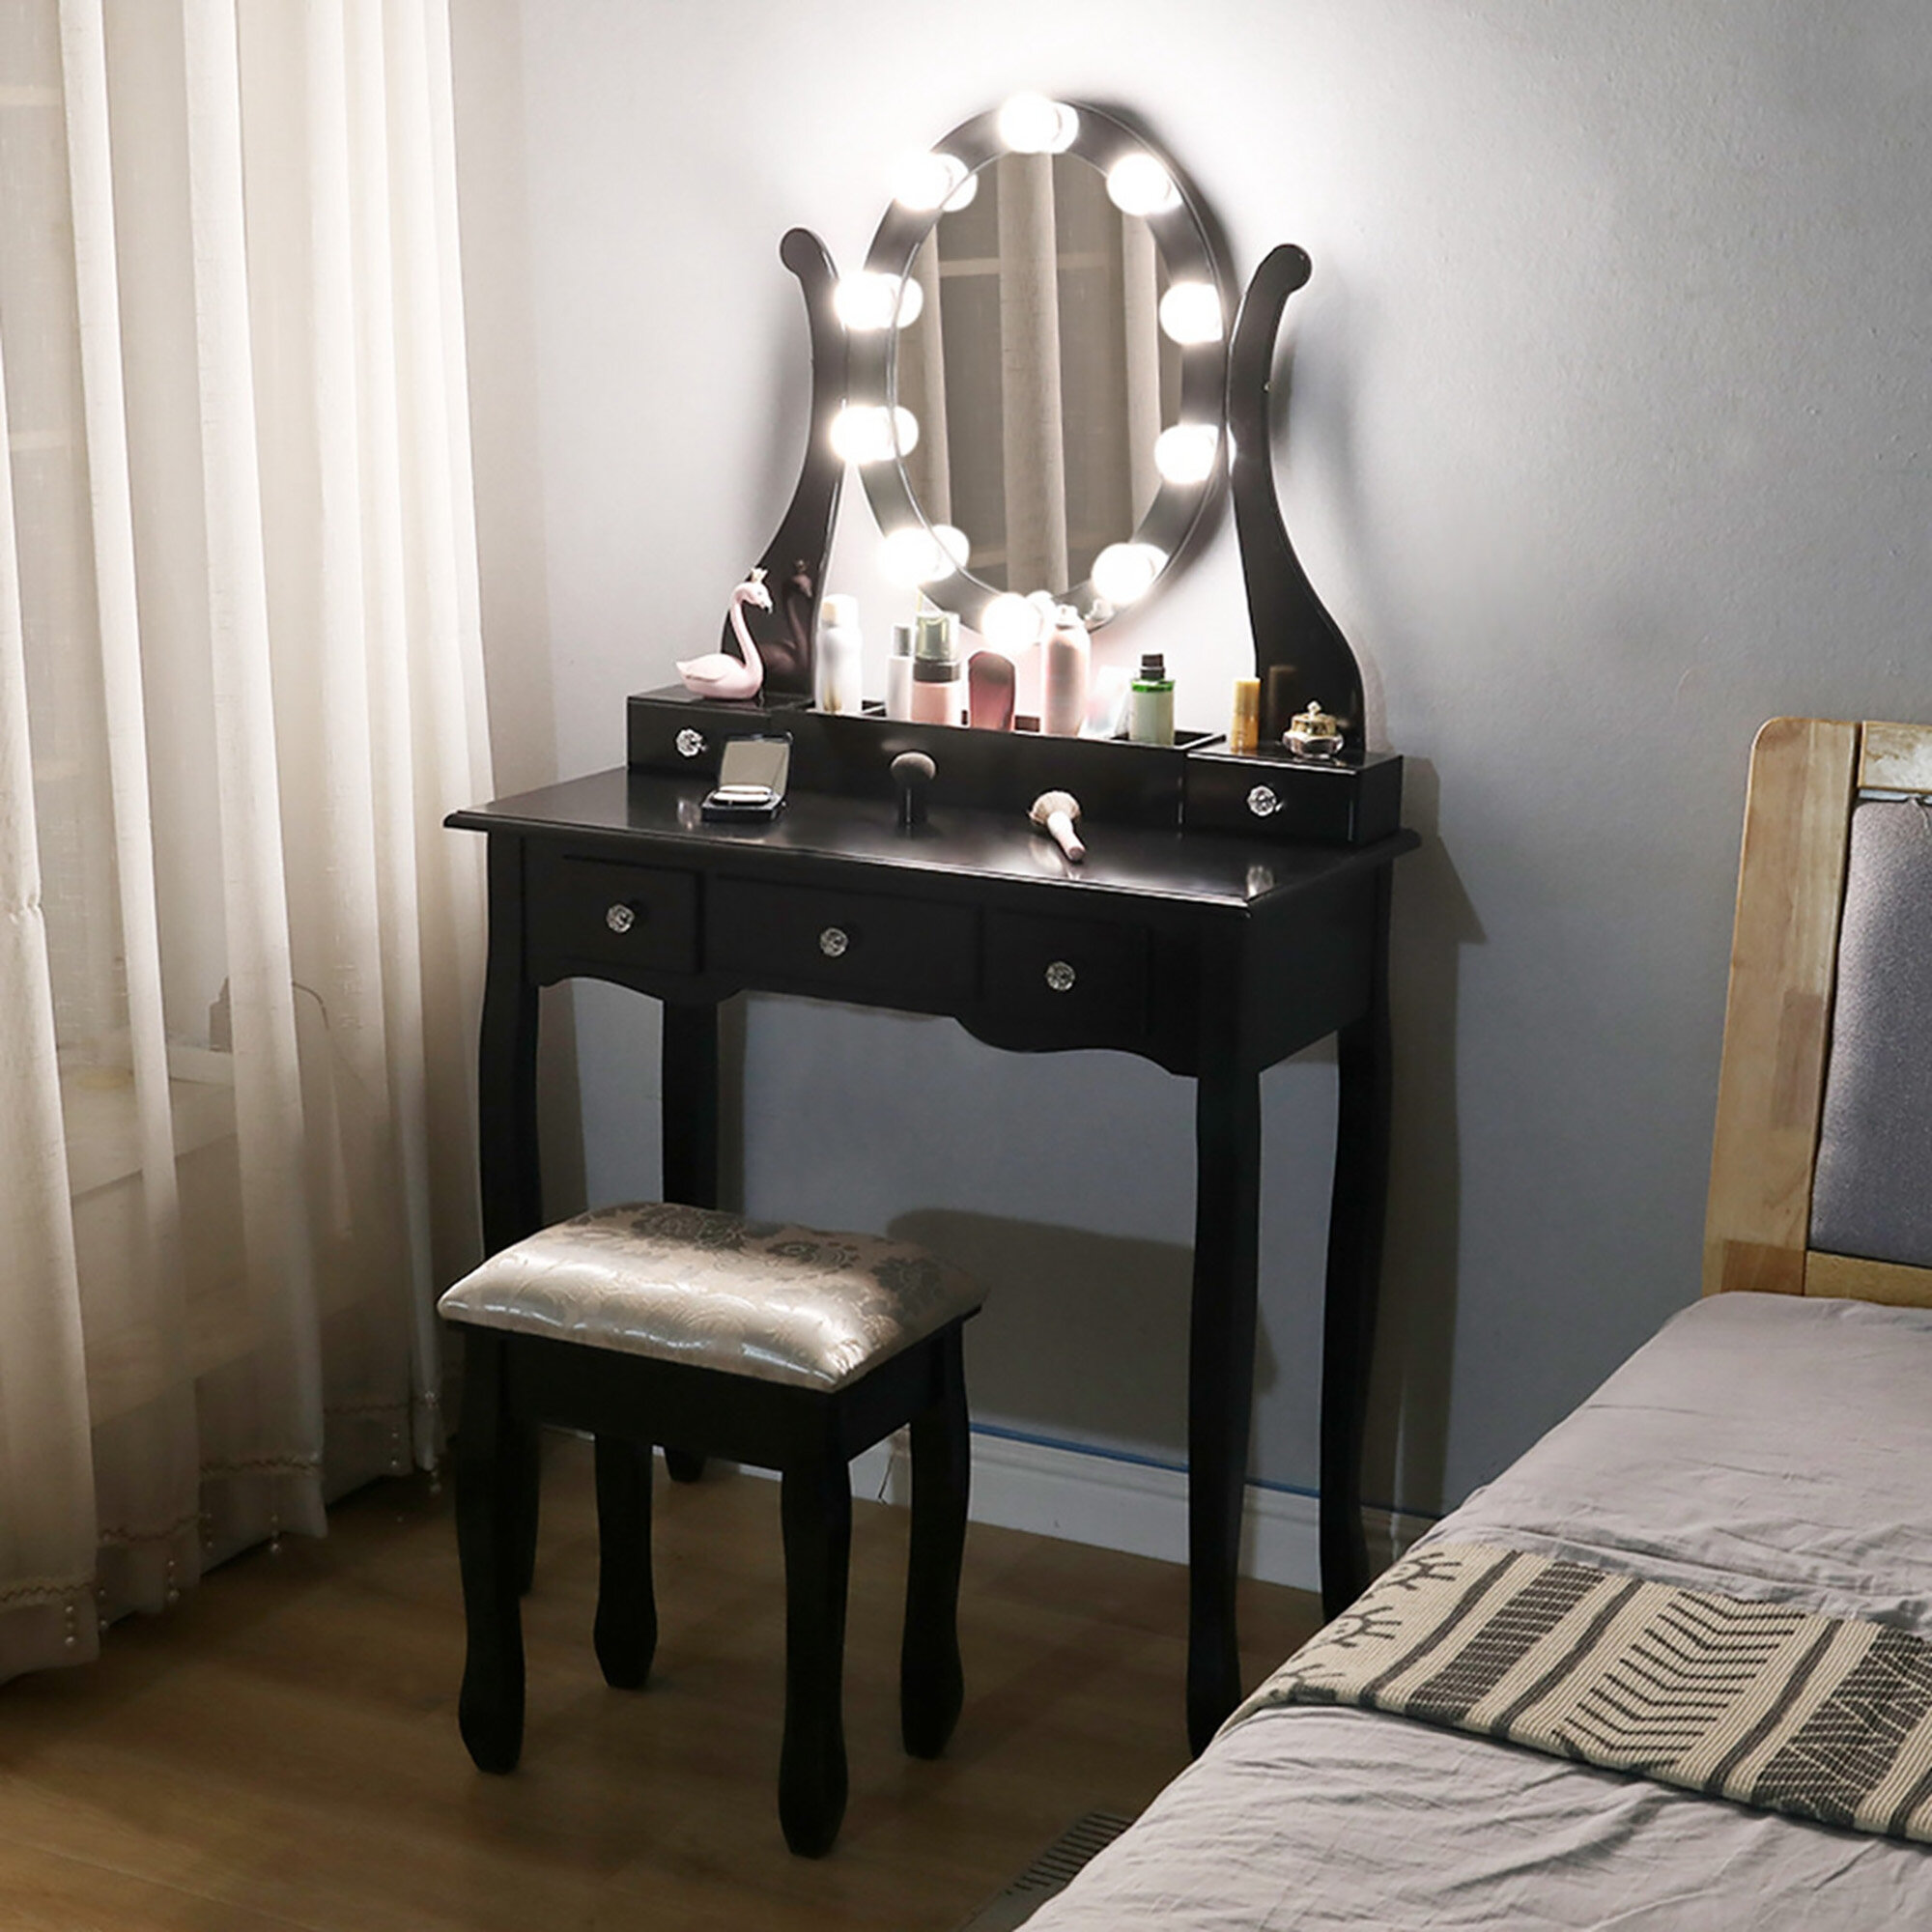 Details about   Girls Vanity Makeup Kids Dressing Table Set w/ Stool Drawer & Fold Mirrors Blue 